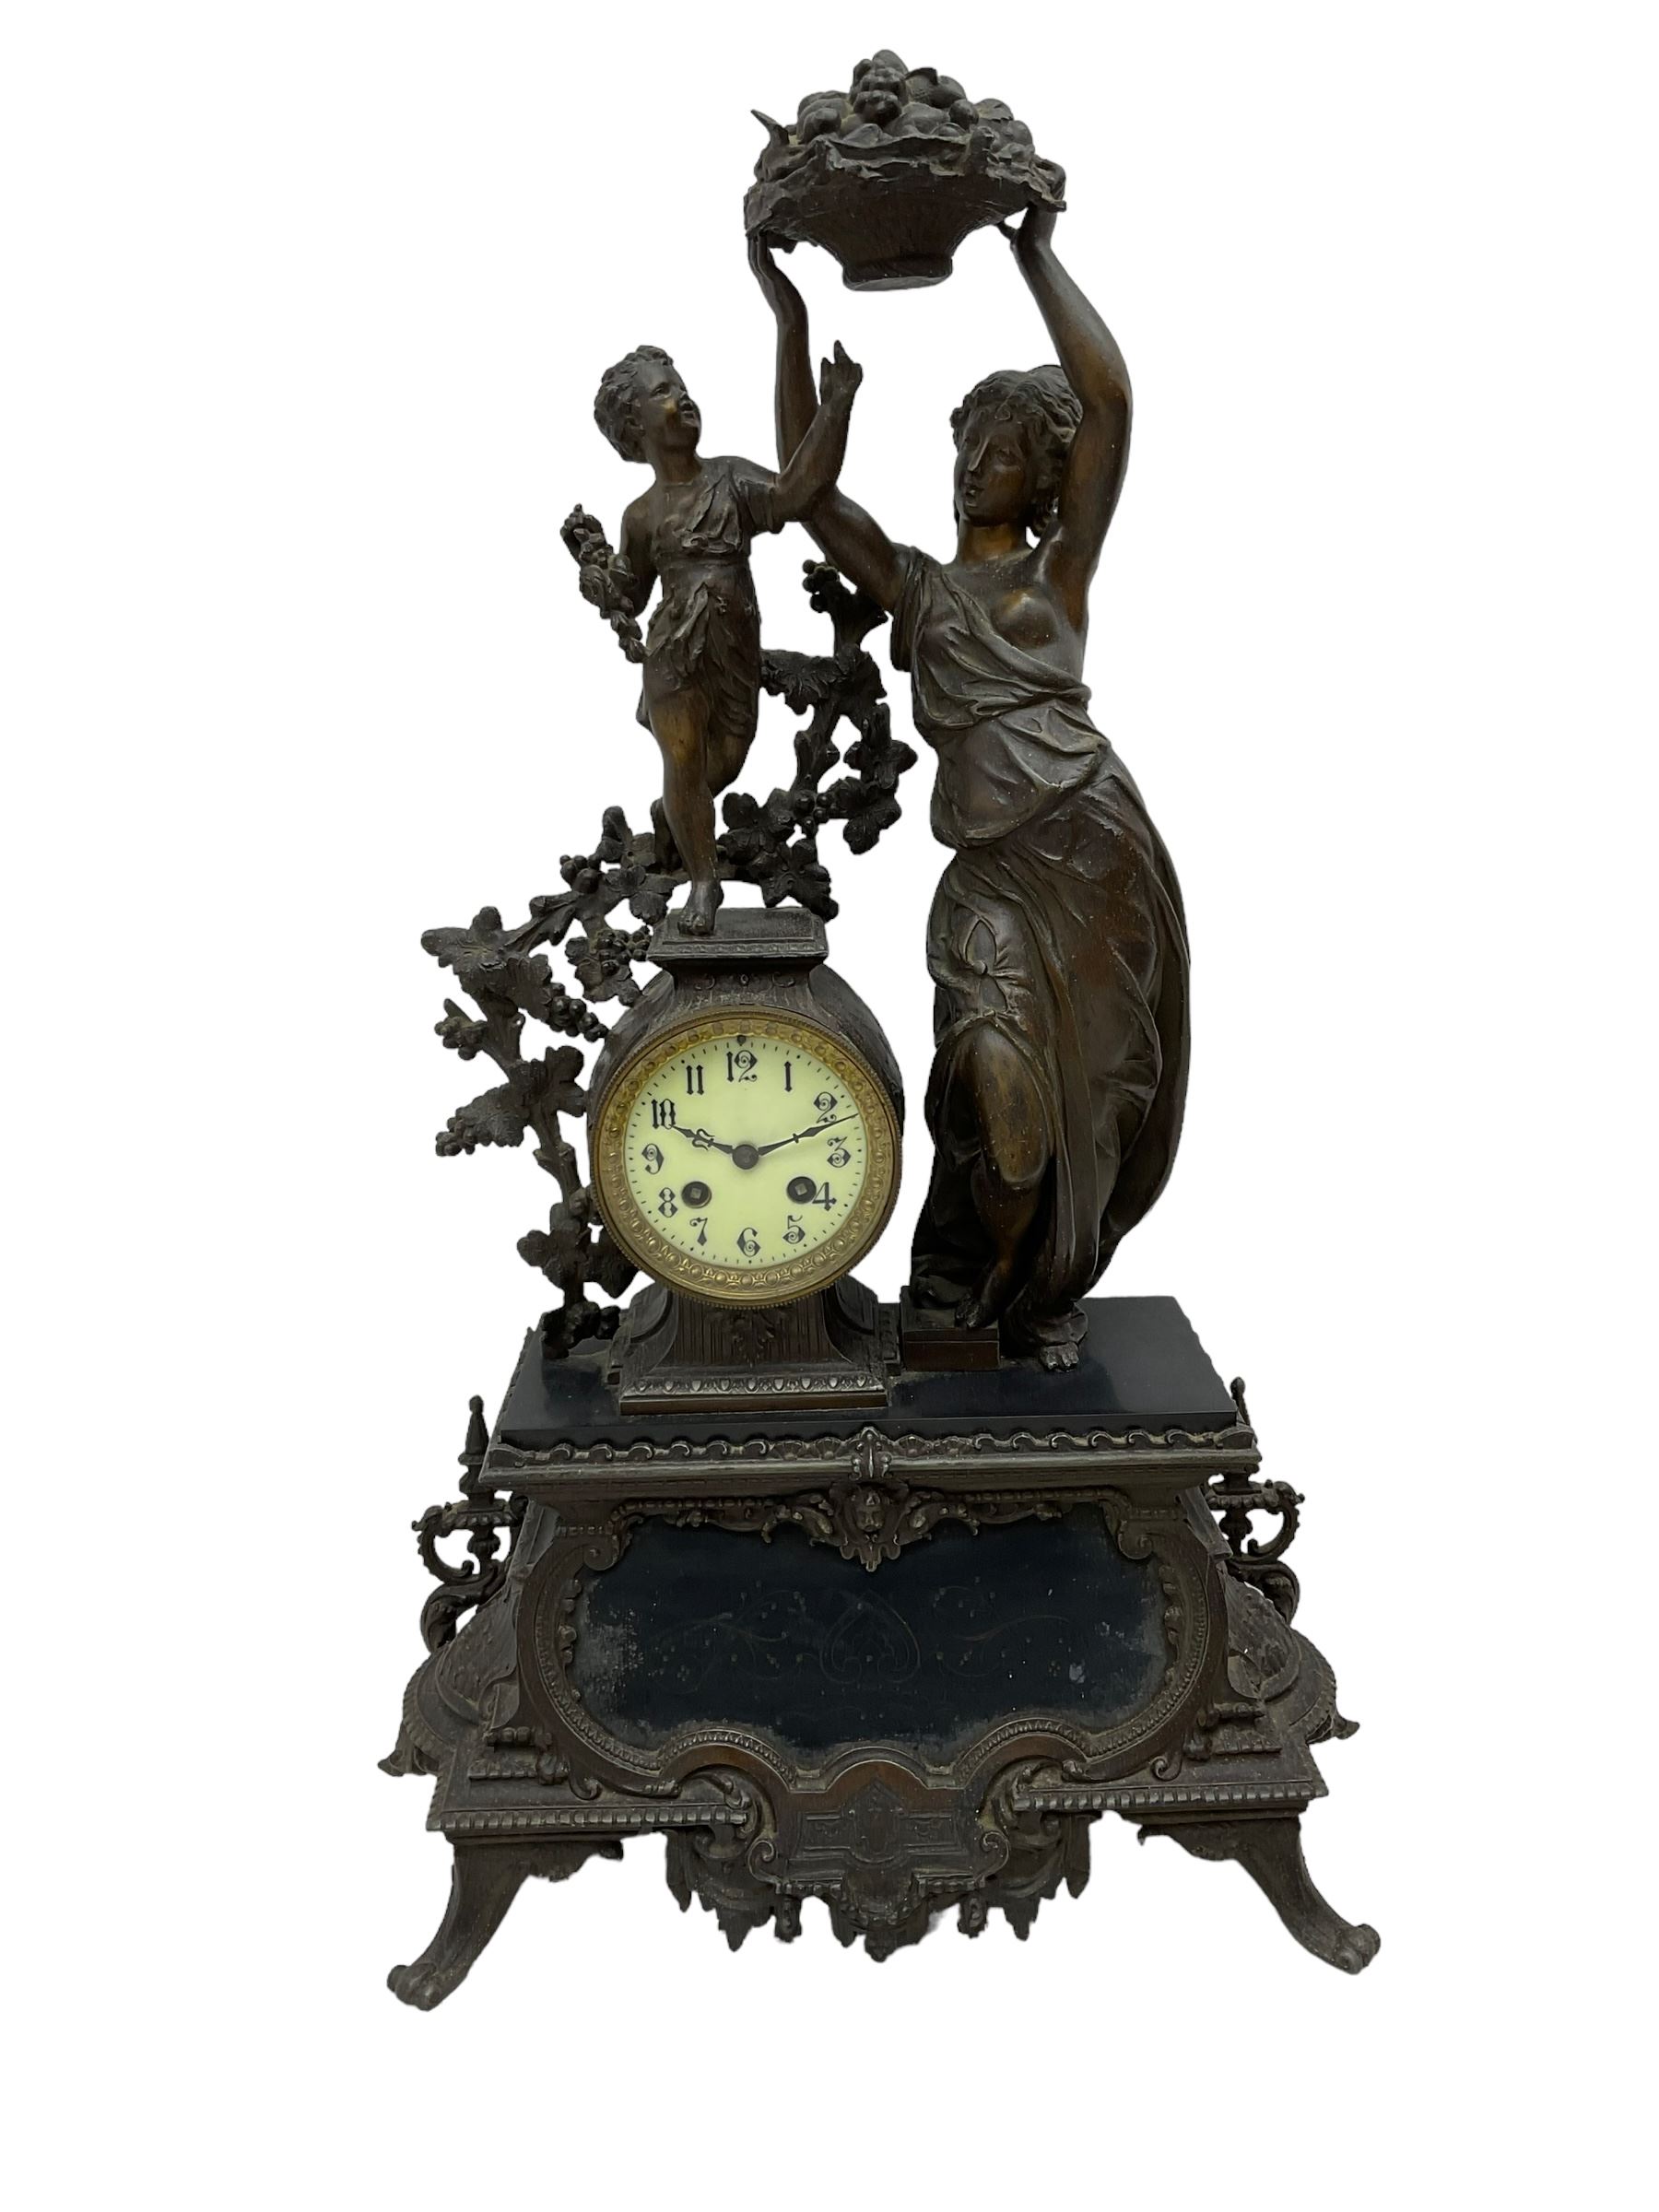 Vincenti and Cie - late 19th century figural clock garniture